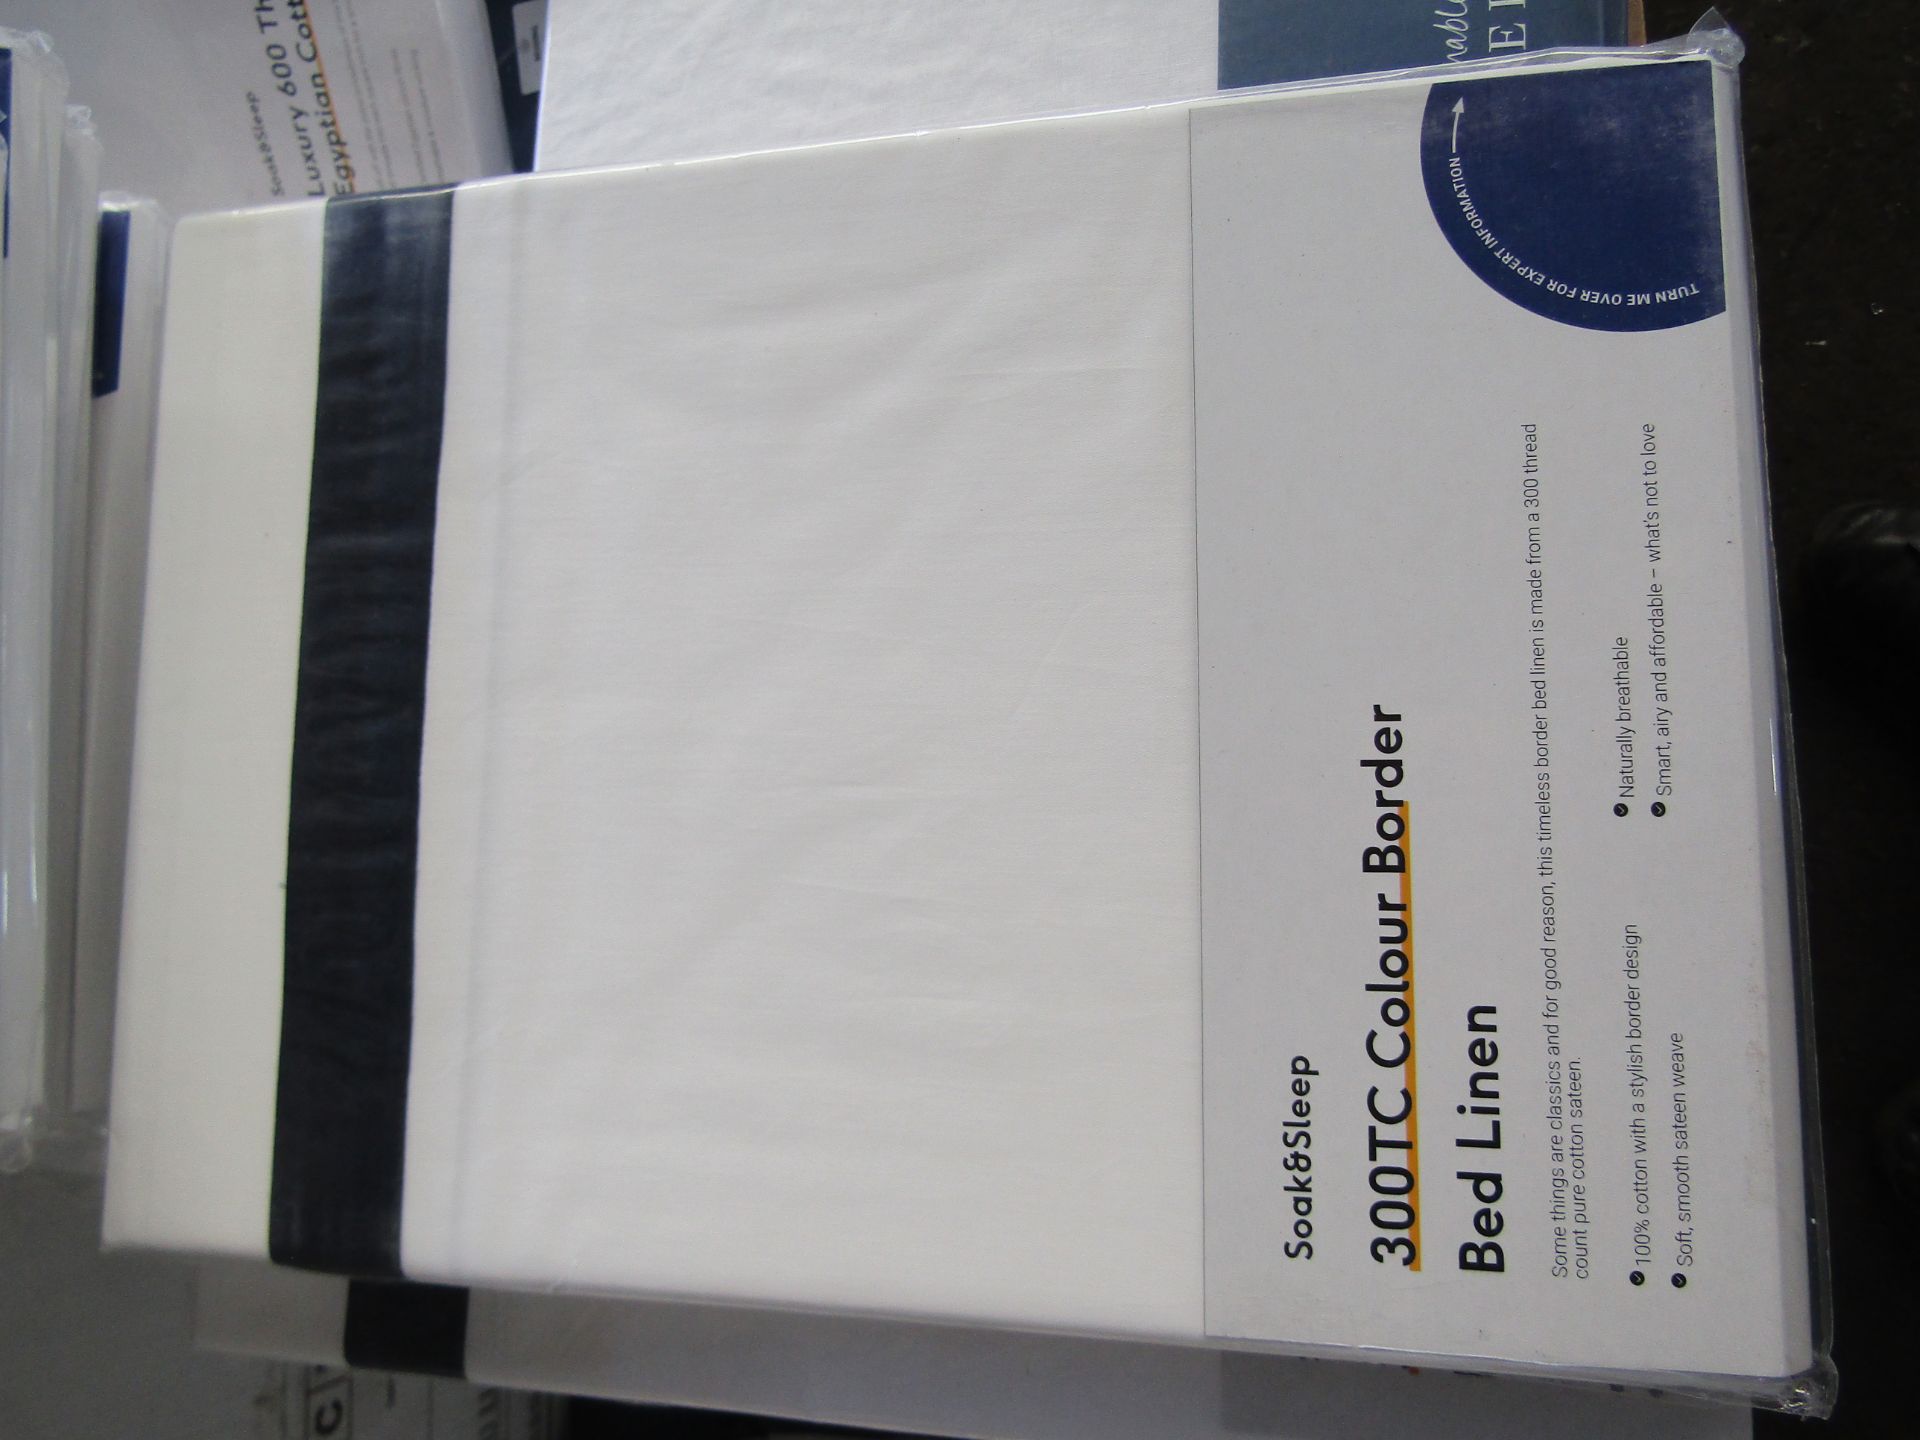 Soak & Sleep Soak & Sleep White/Navy 300TC Colour Border Cotton Single Flat Sheet RRP 17 - Image 2 of 2